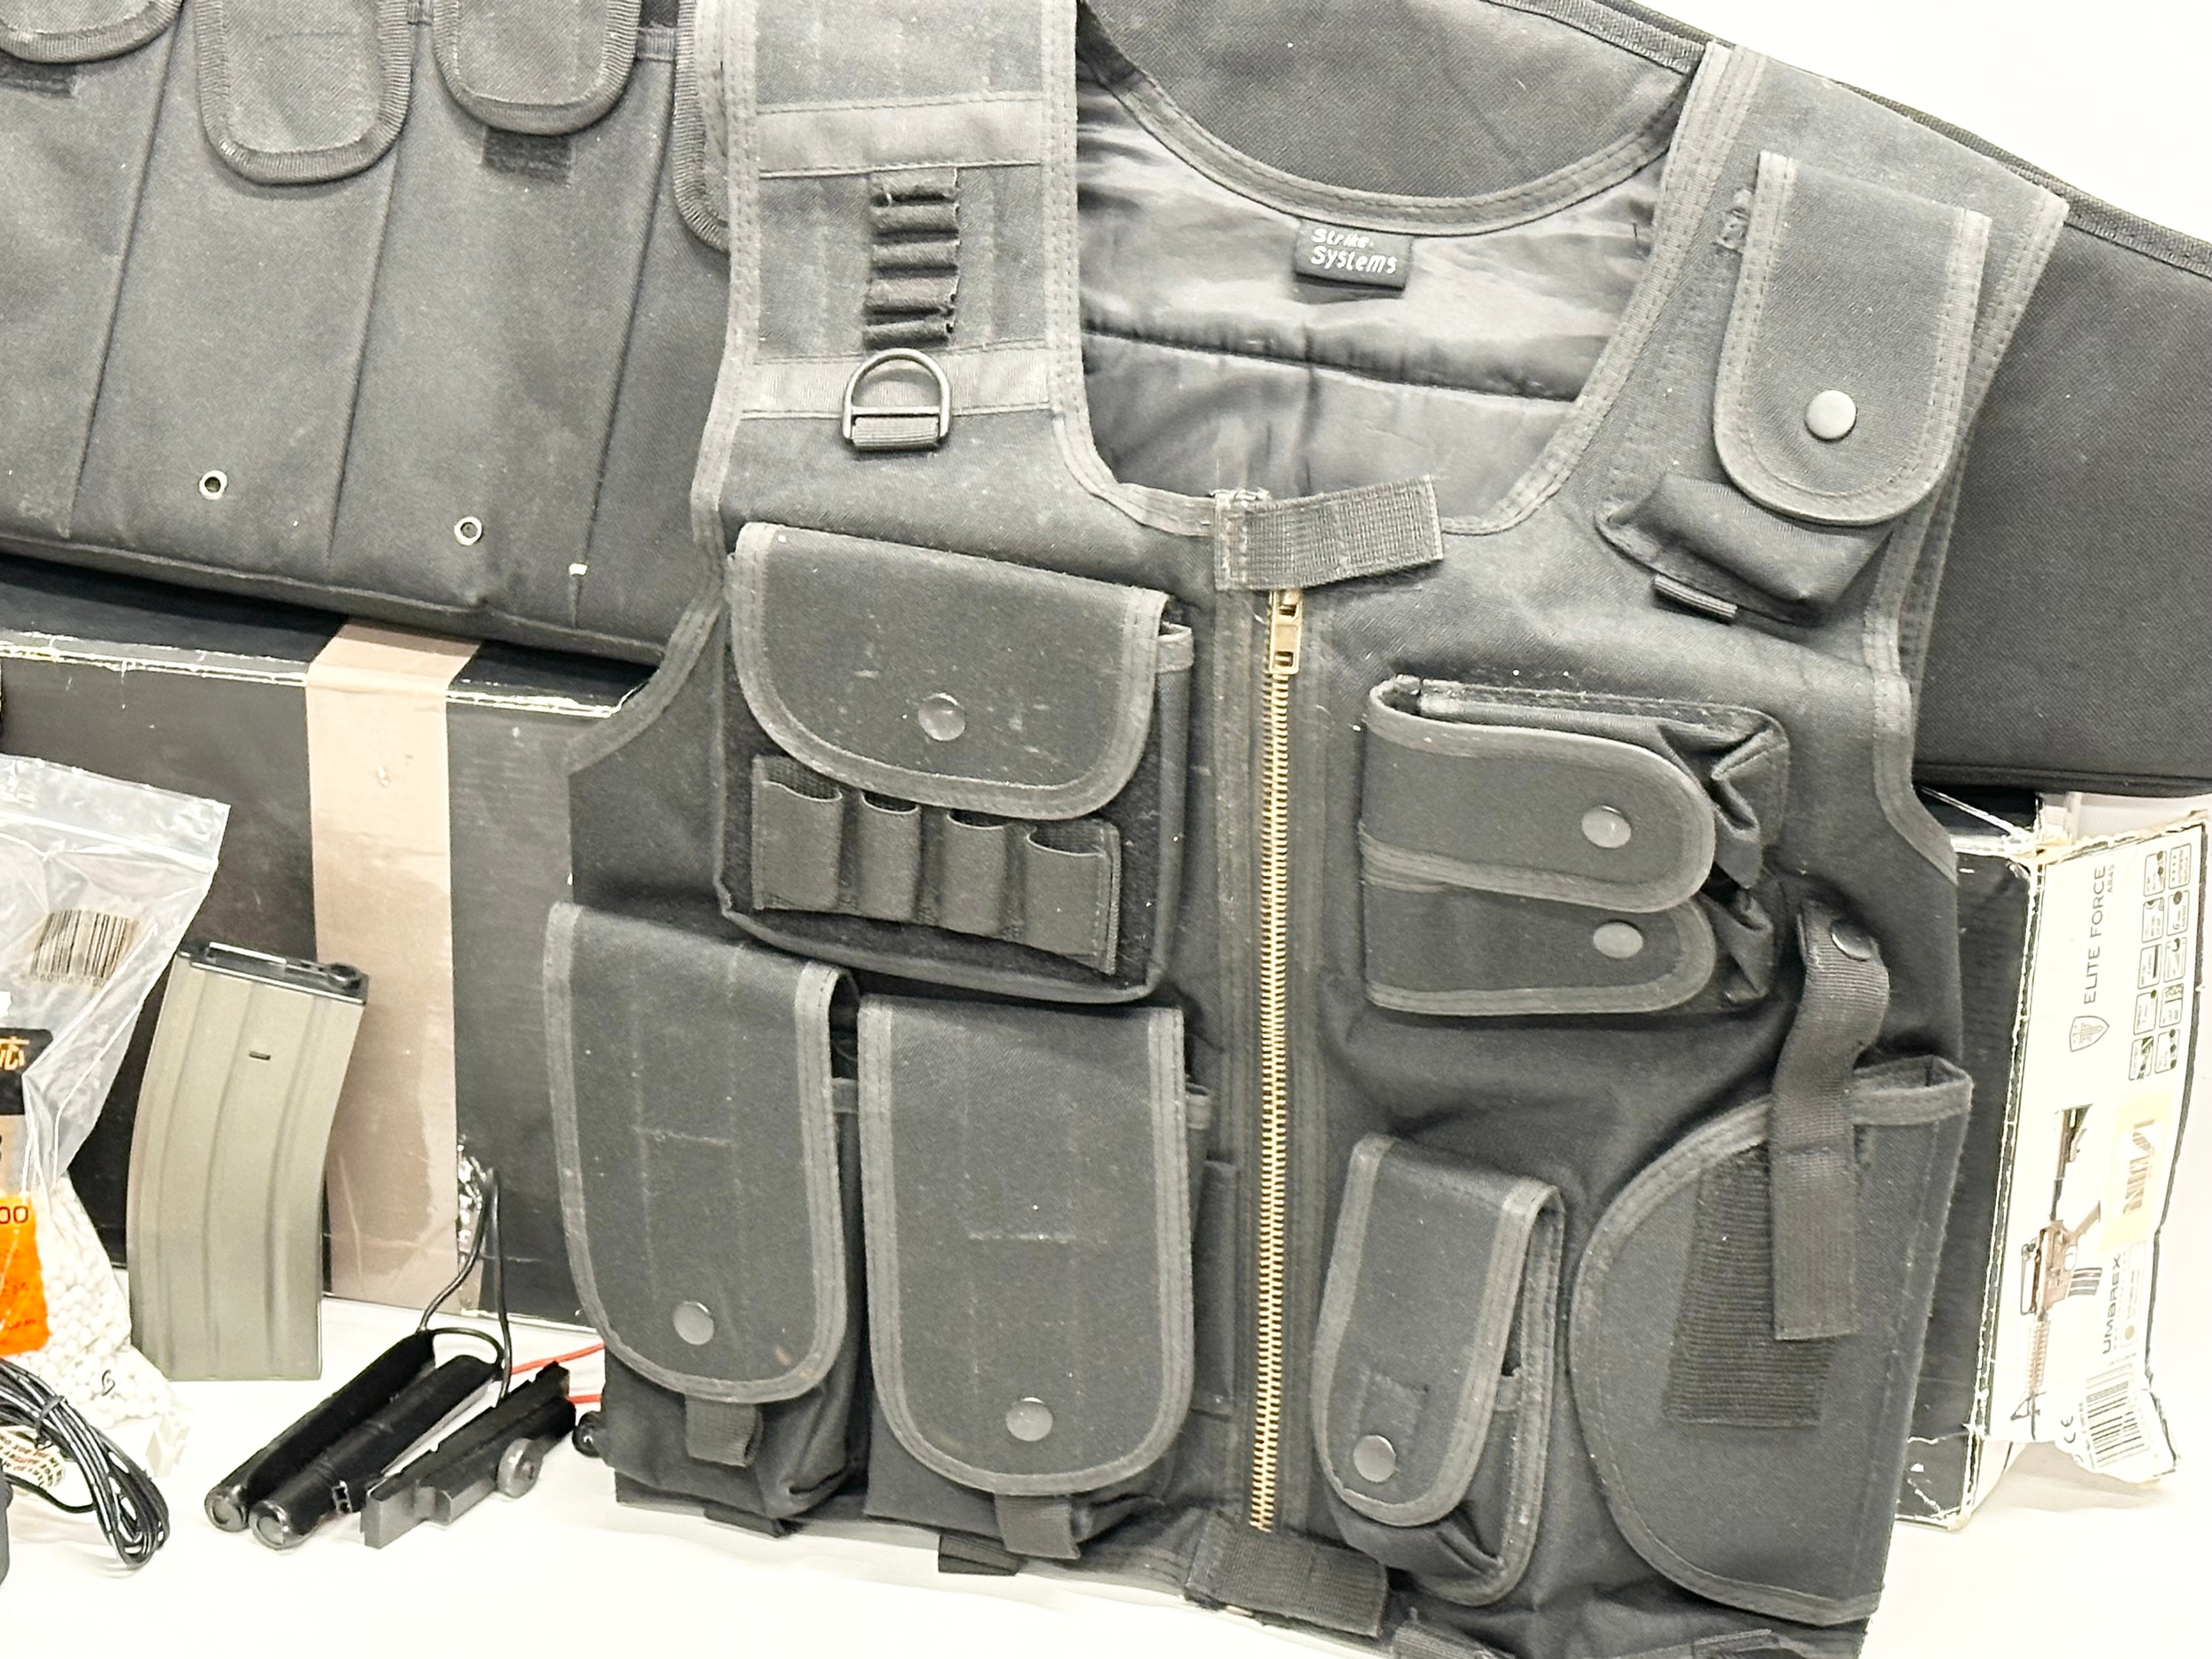 An Umarex Elite Force electric assault rifle with box, pellets, tactical vest, carting case etc. - Image 5 of 7